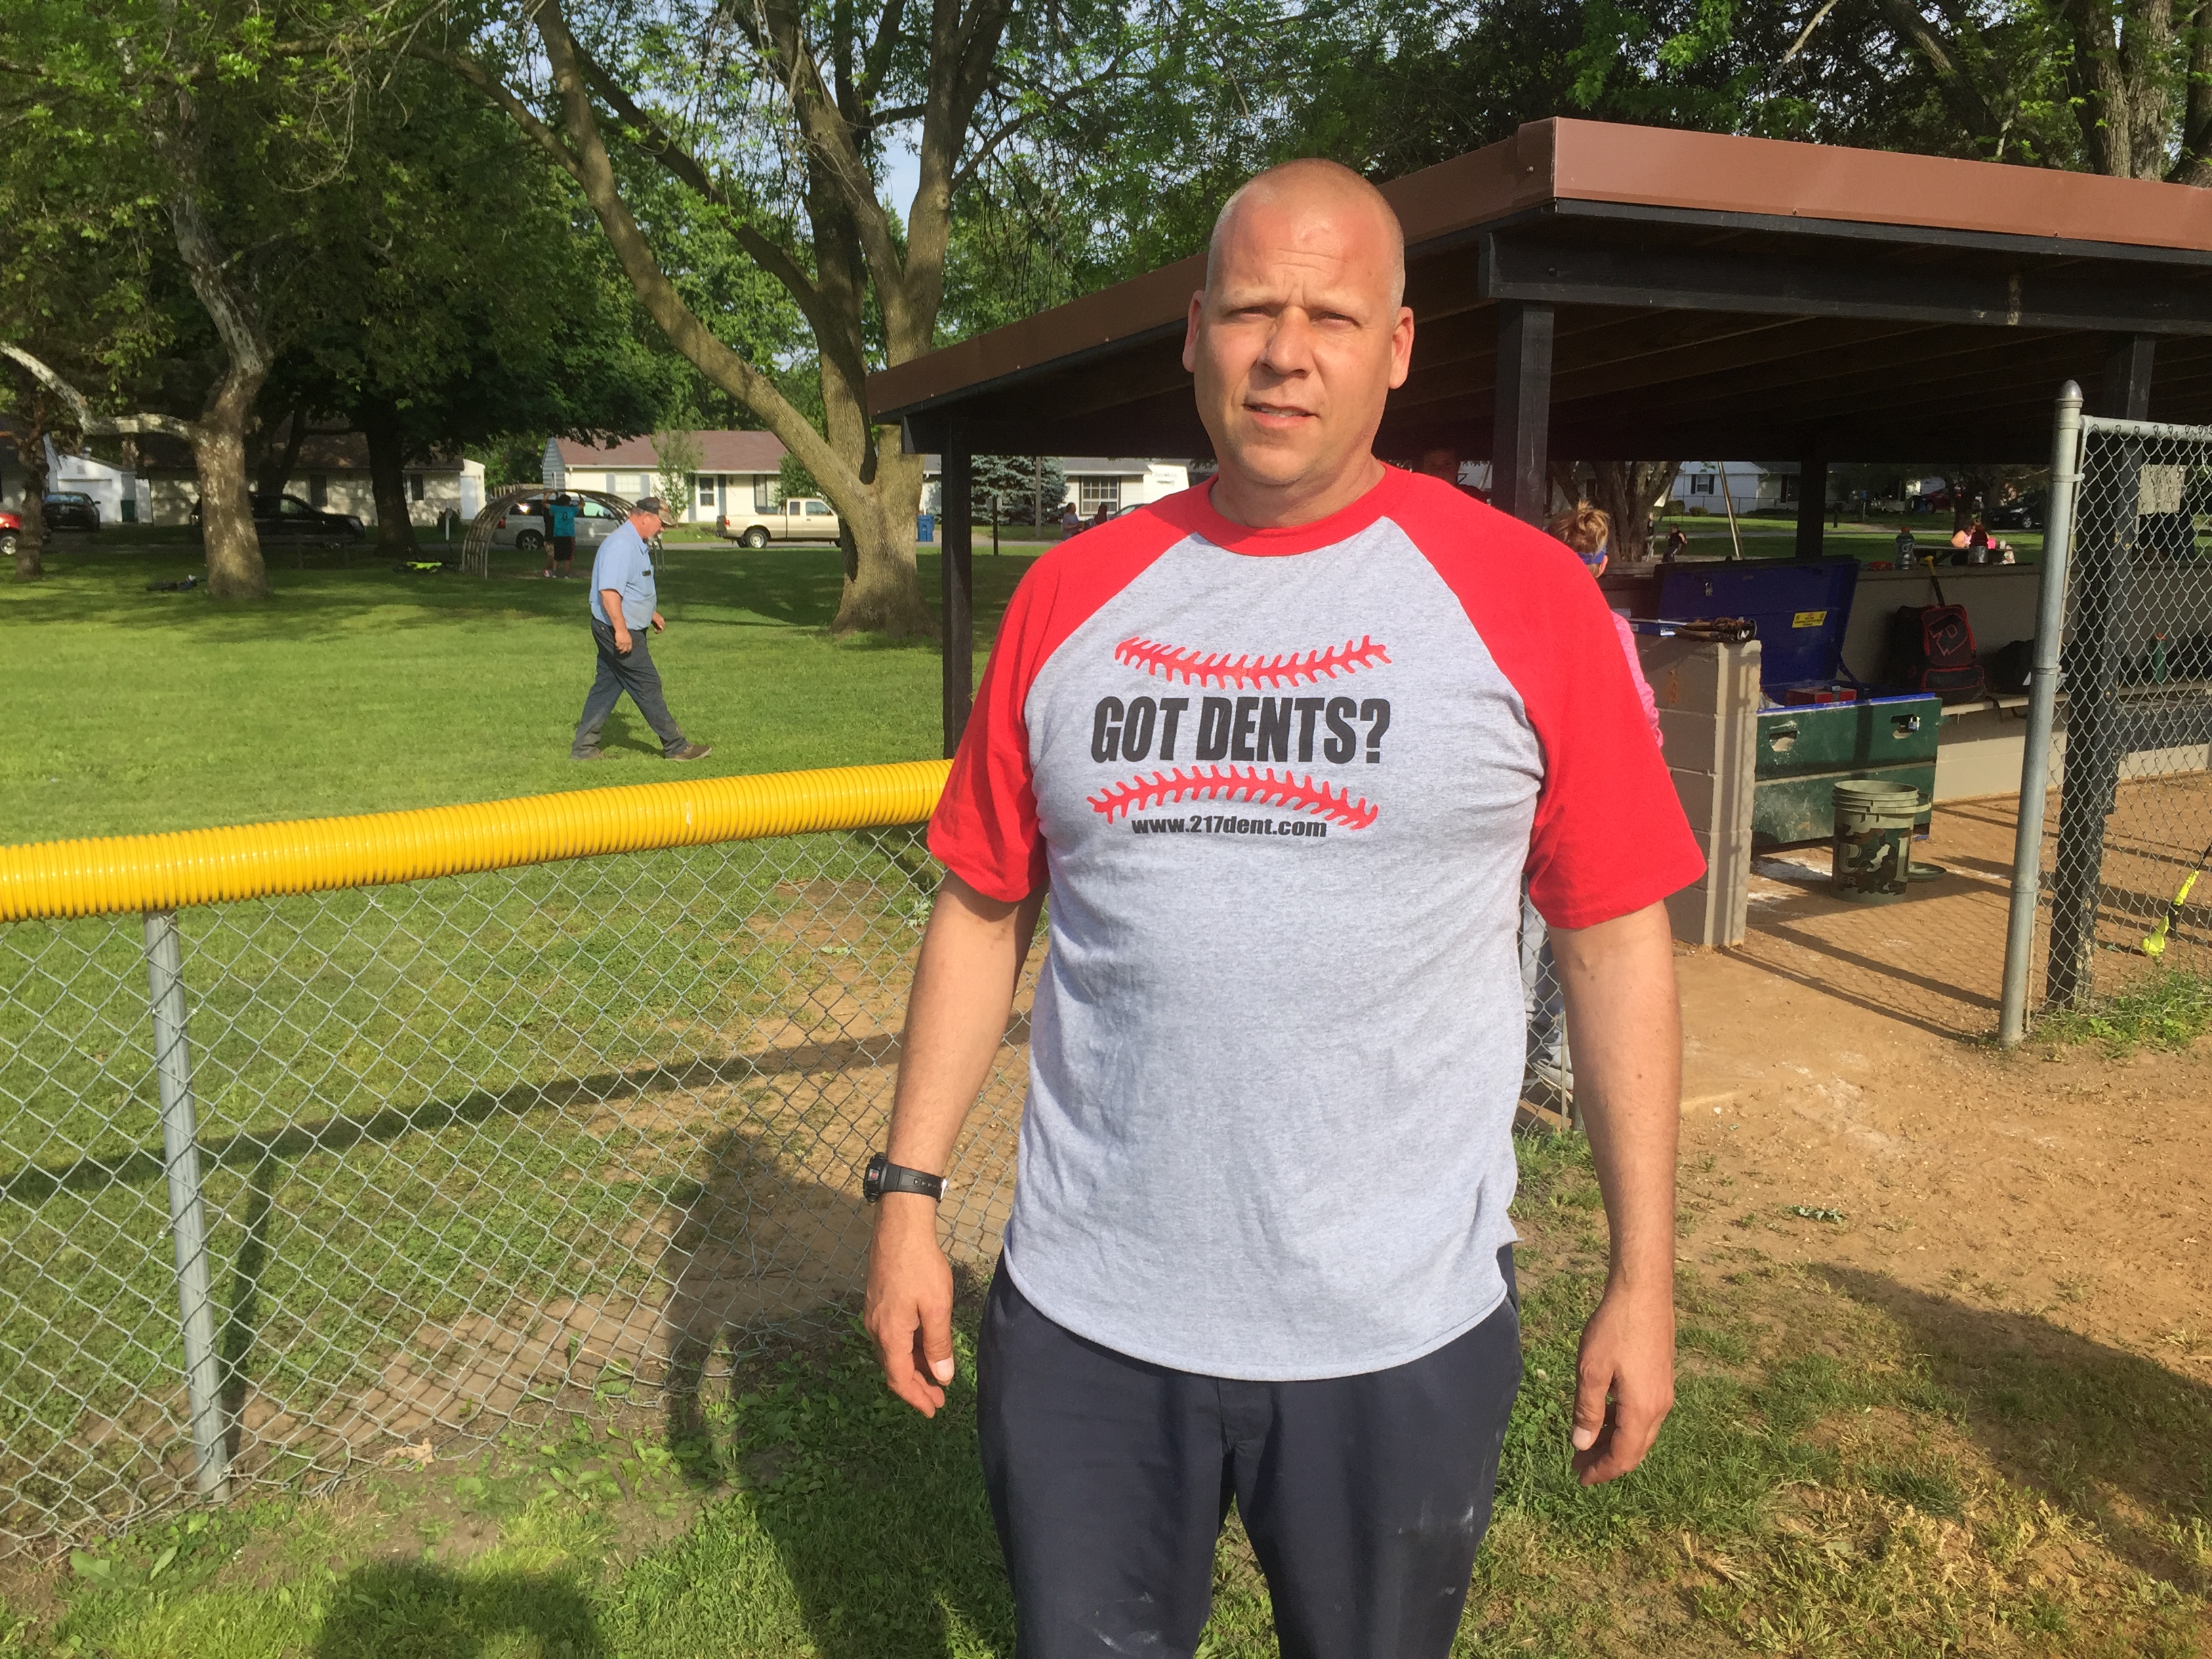 http://217dent.com Baseball Team 2016 Assistant Coach Paul Pfeiffer Springfield, IL